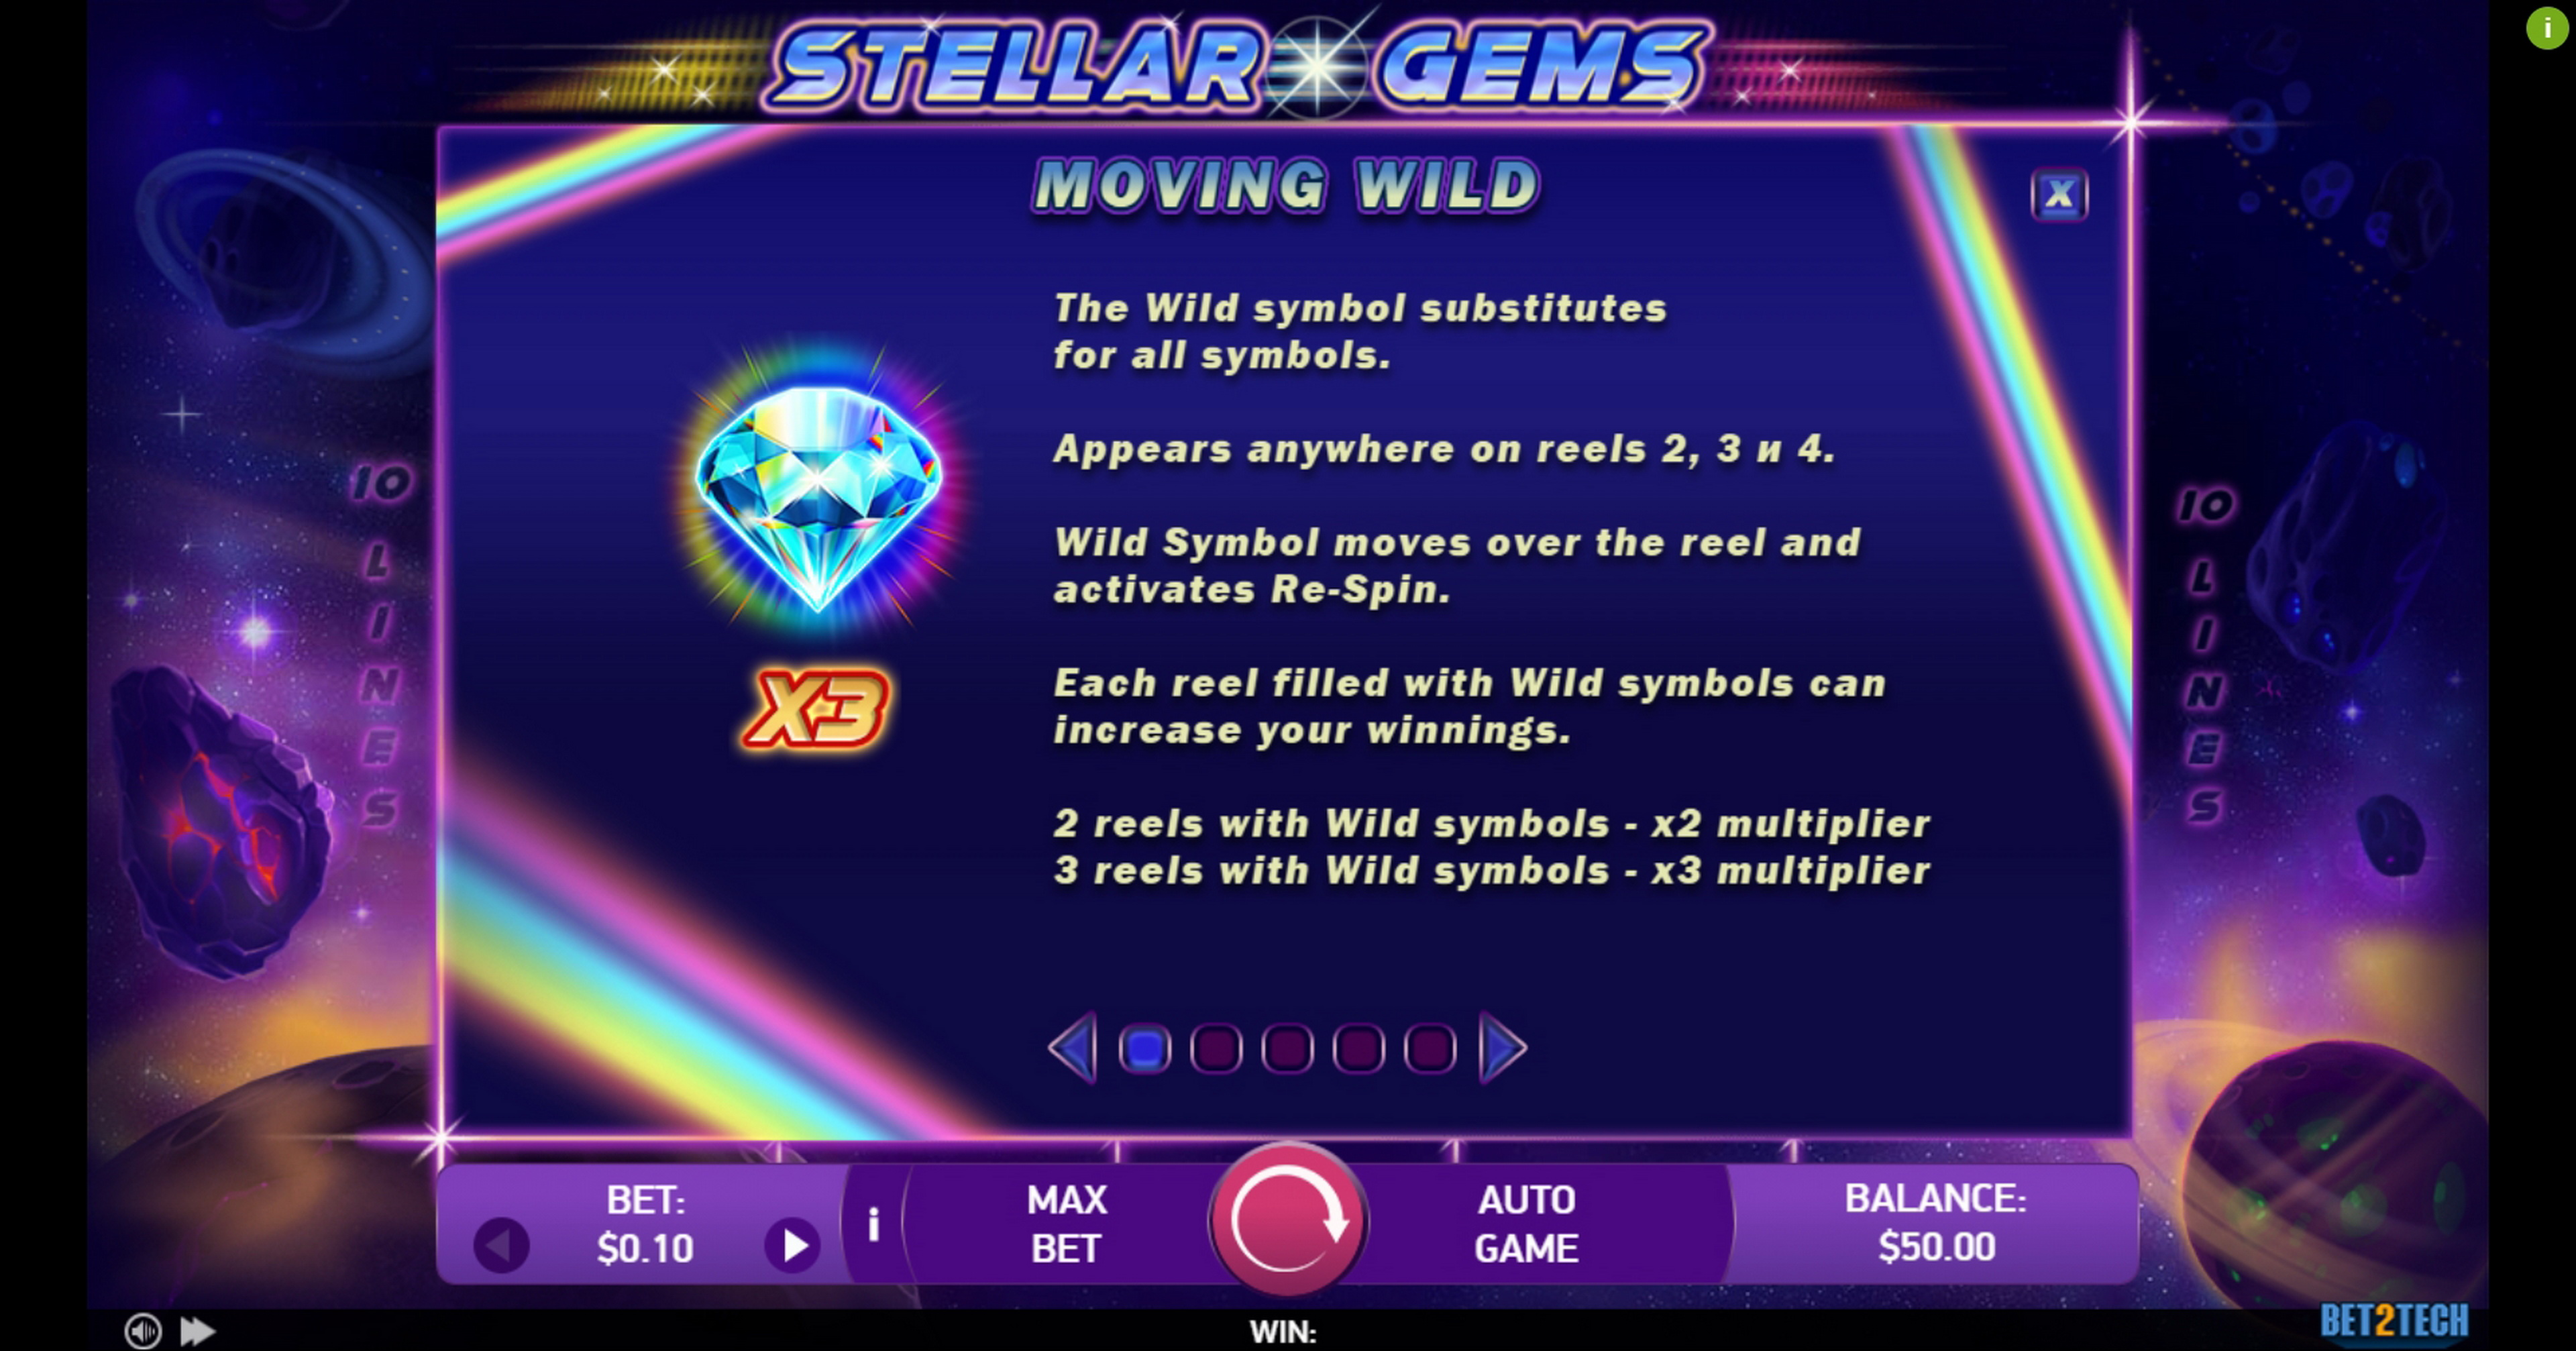 Info of Stellar Gems Slot Game by Bet2Tech